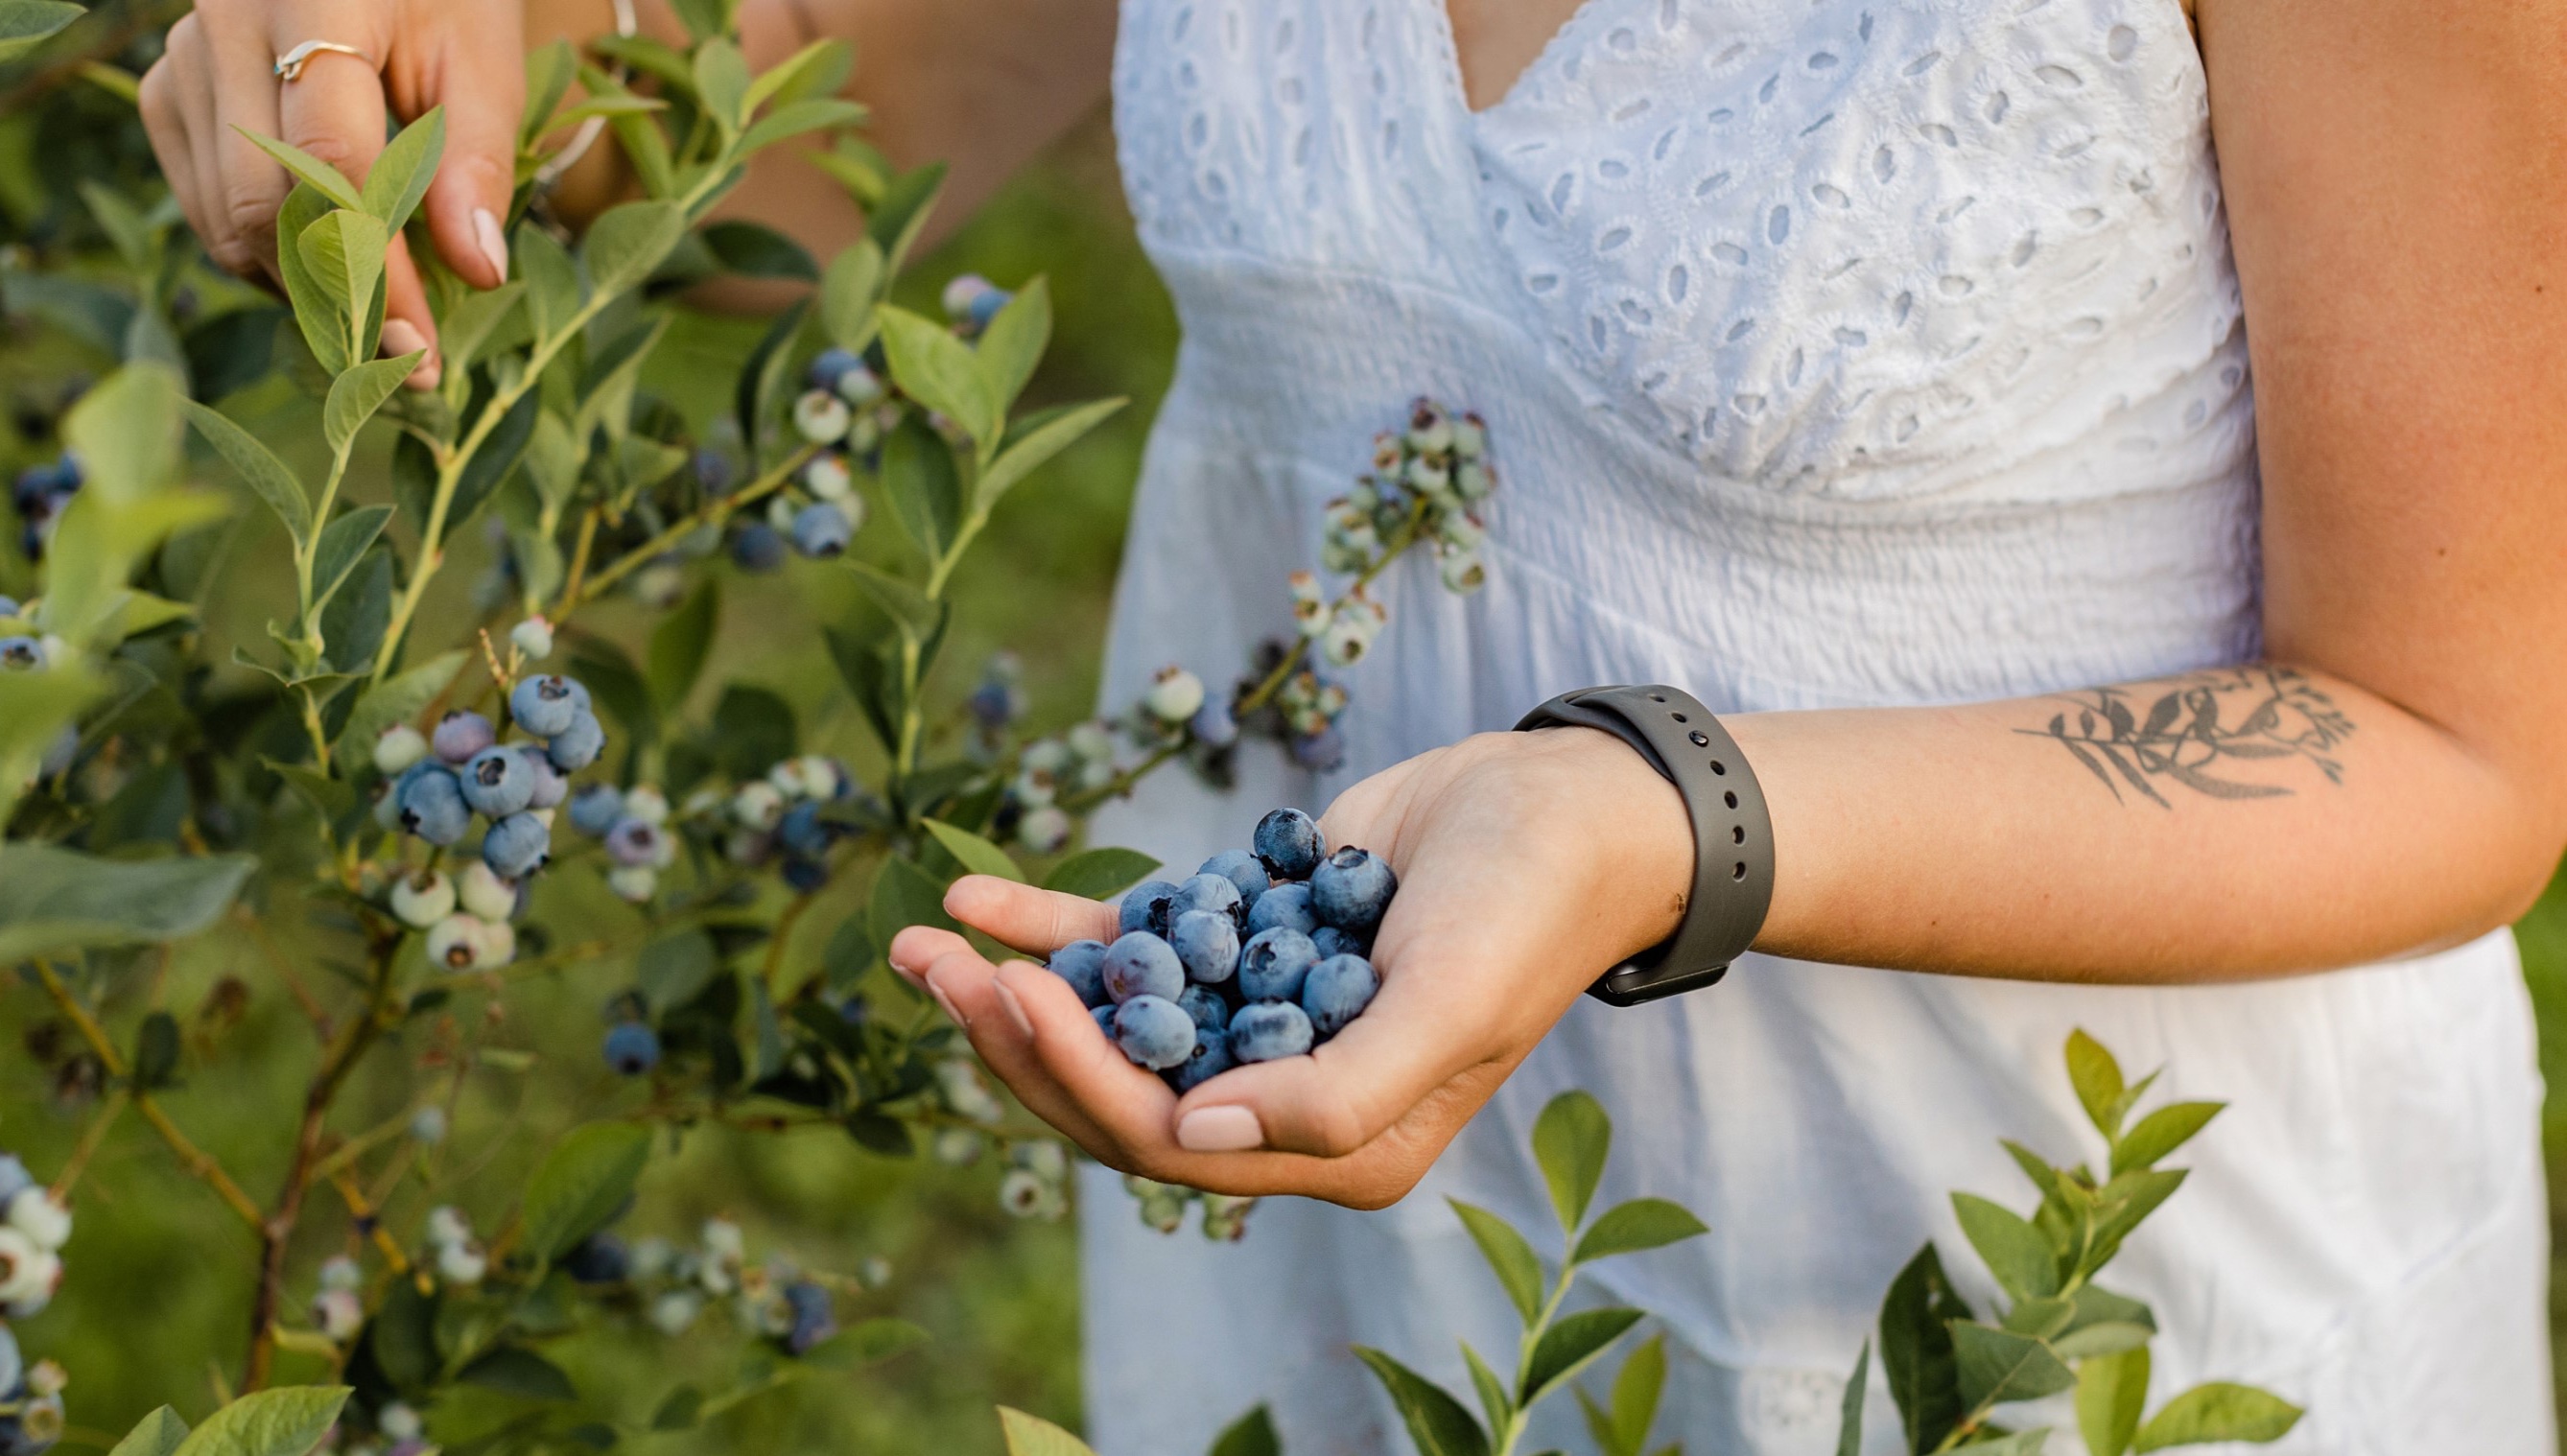 8 benefits of Polish blueberries